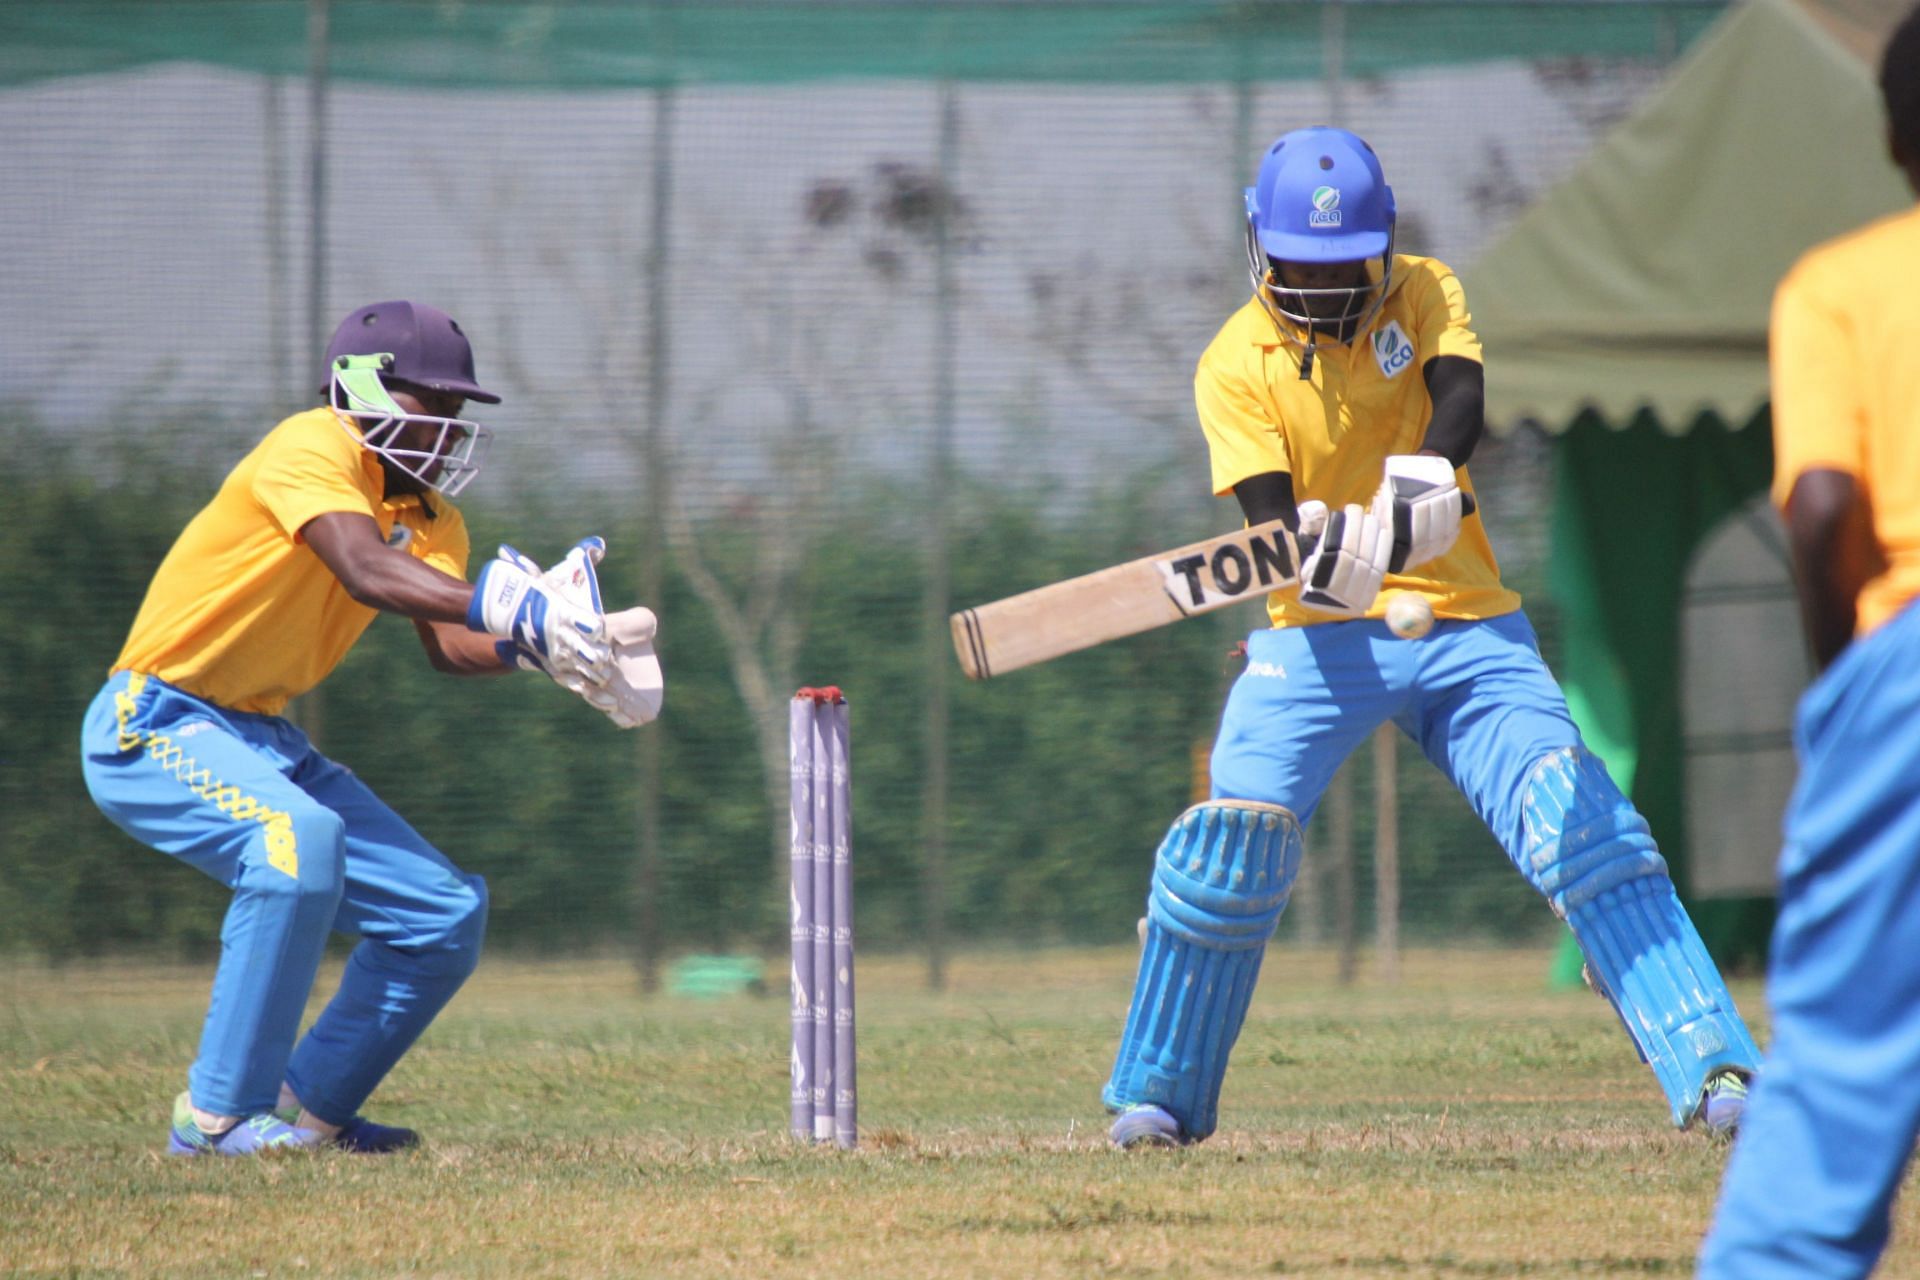 Image Credits: Rwanda Cricket Association